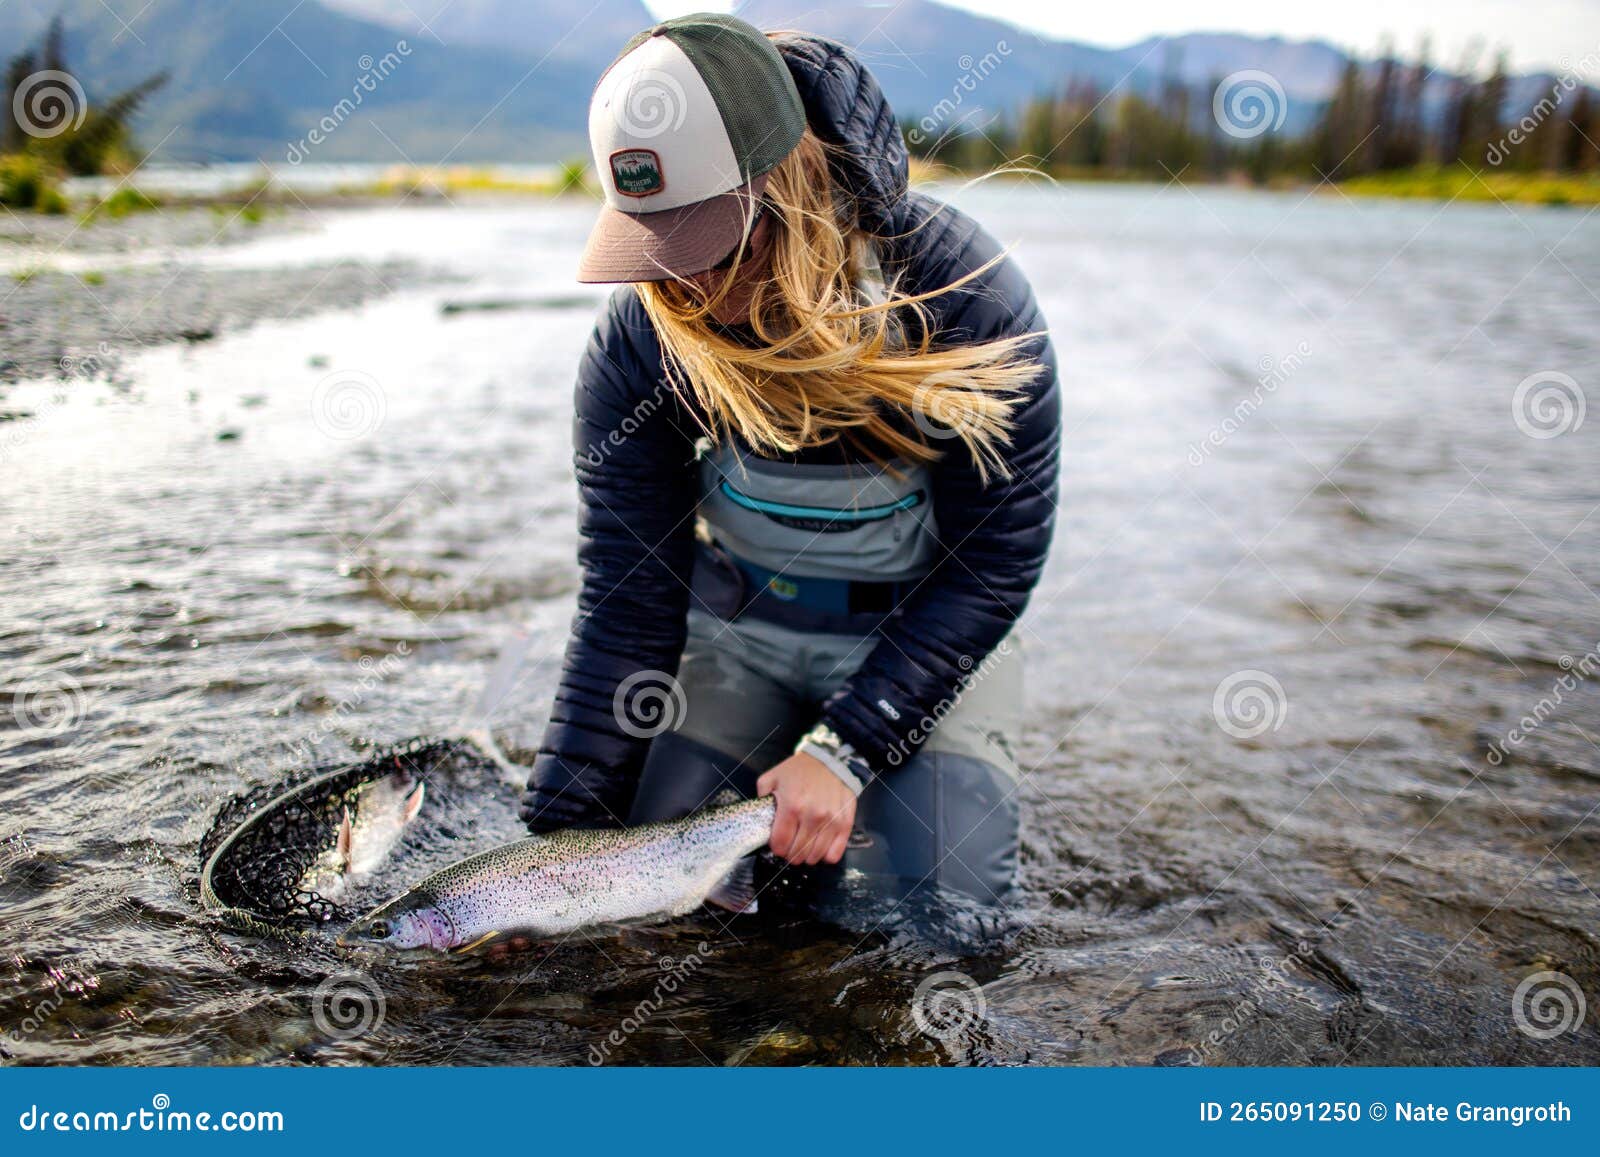 https://thumbs.dreamstime.com/z/woman-fly-fishing-alaska-rainbow-trout-river-fighting-fish-salmon-green-trees-265091250.jpg